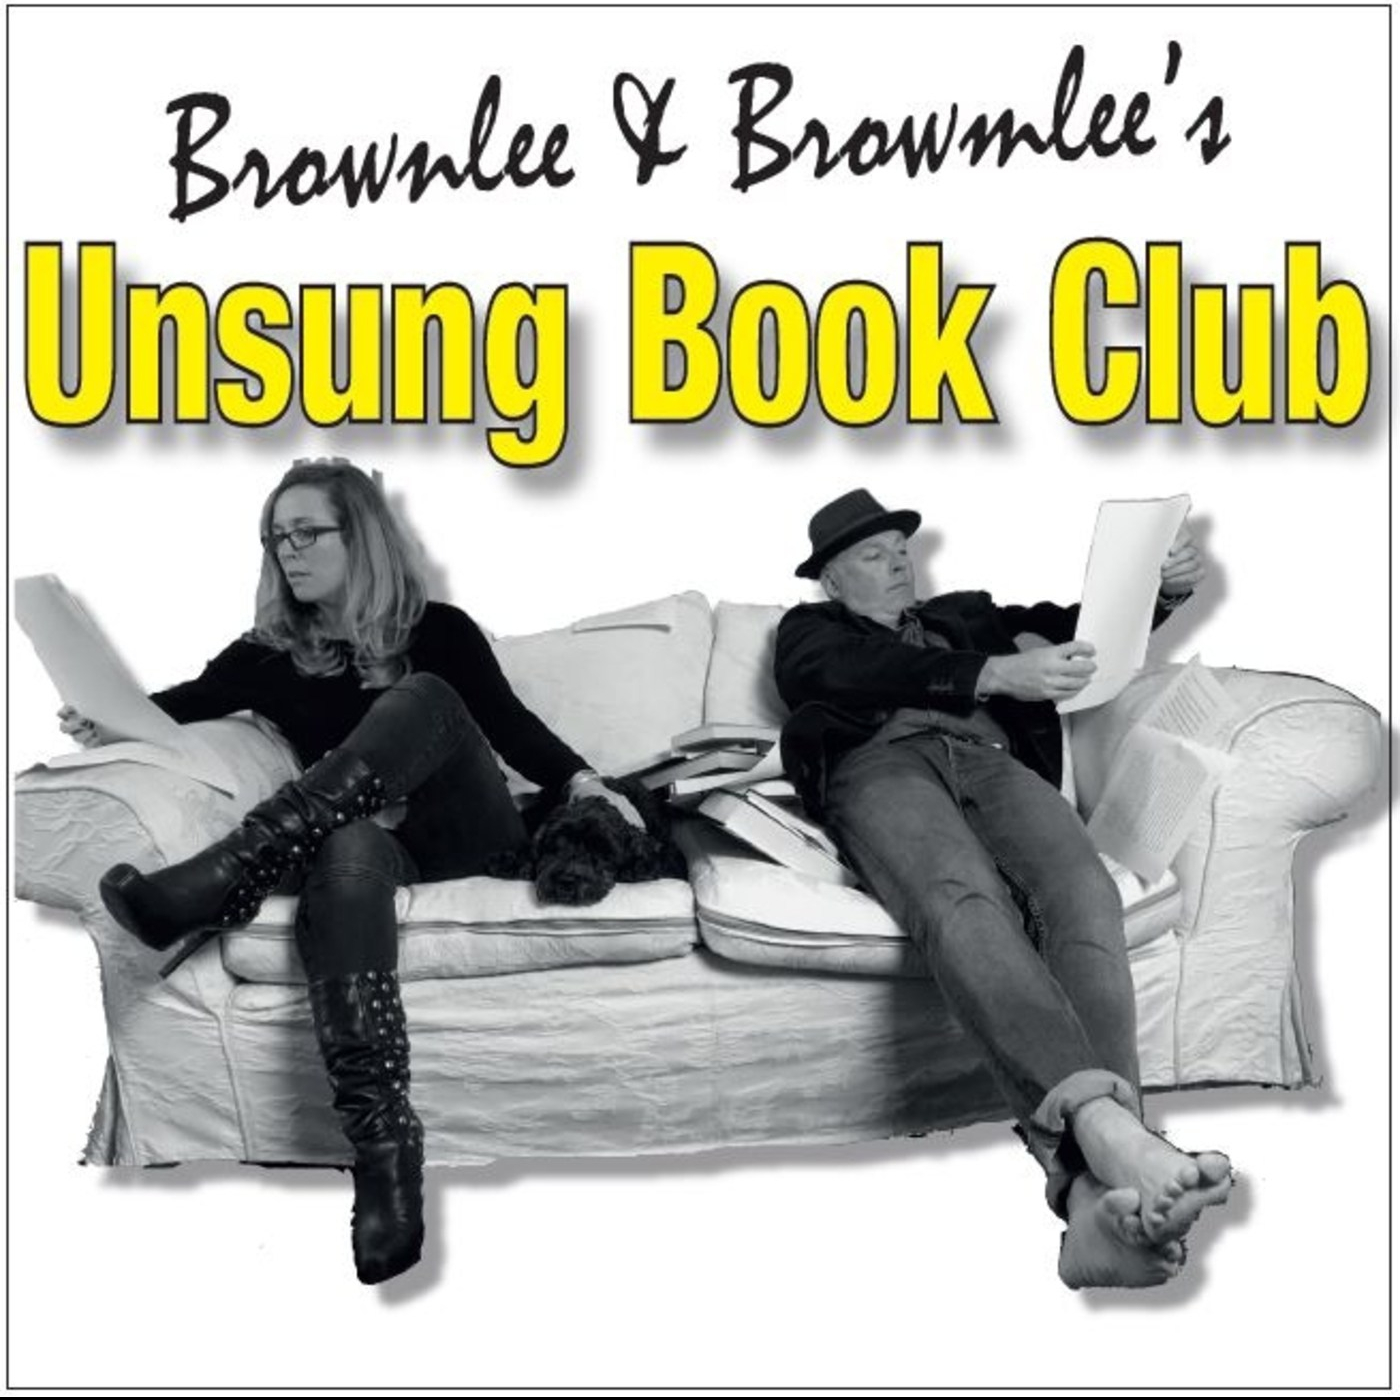 Brownlee and Brownlee's Unsung Book Club